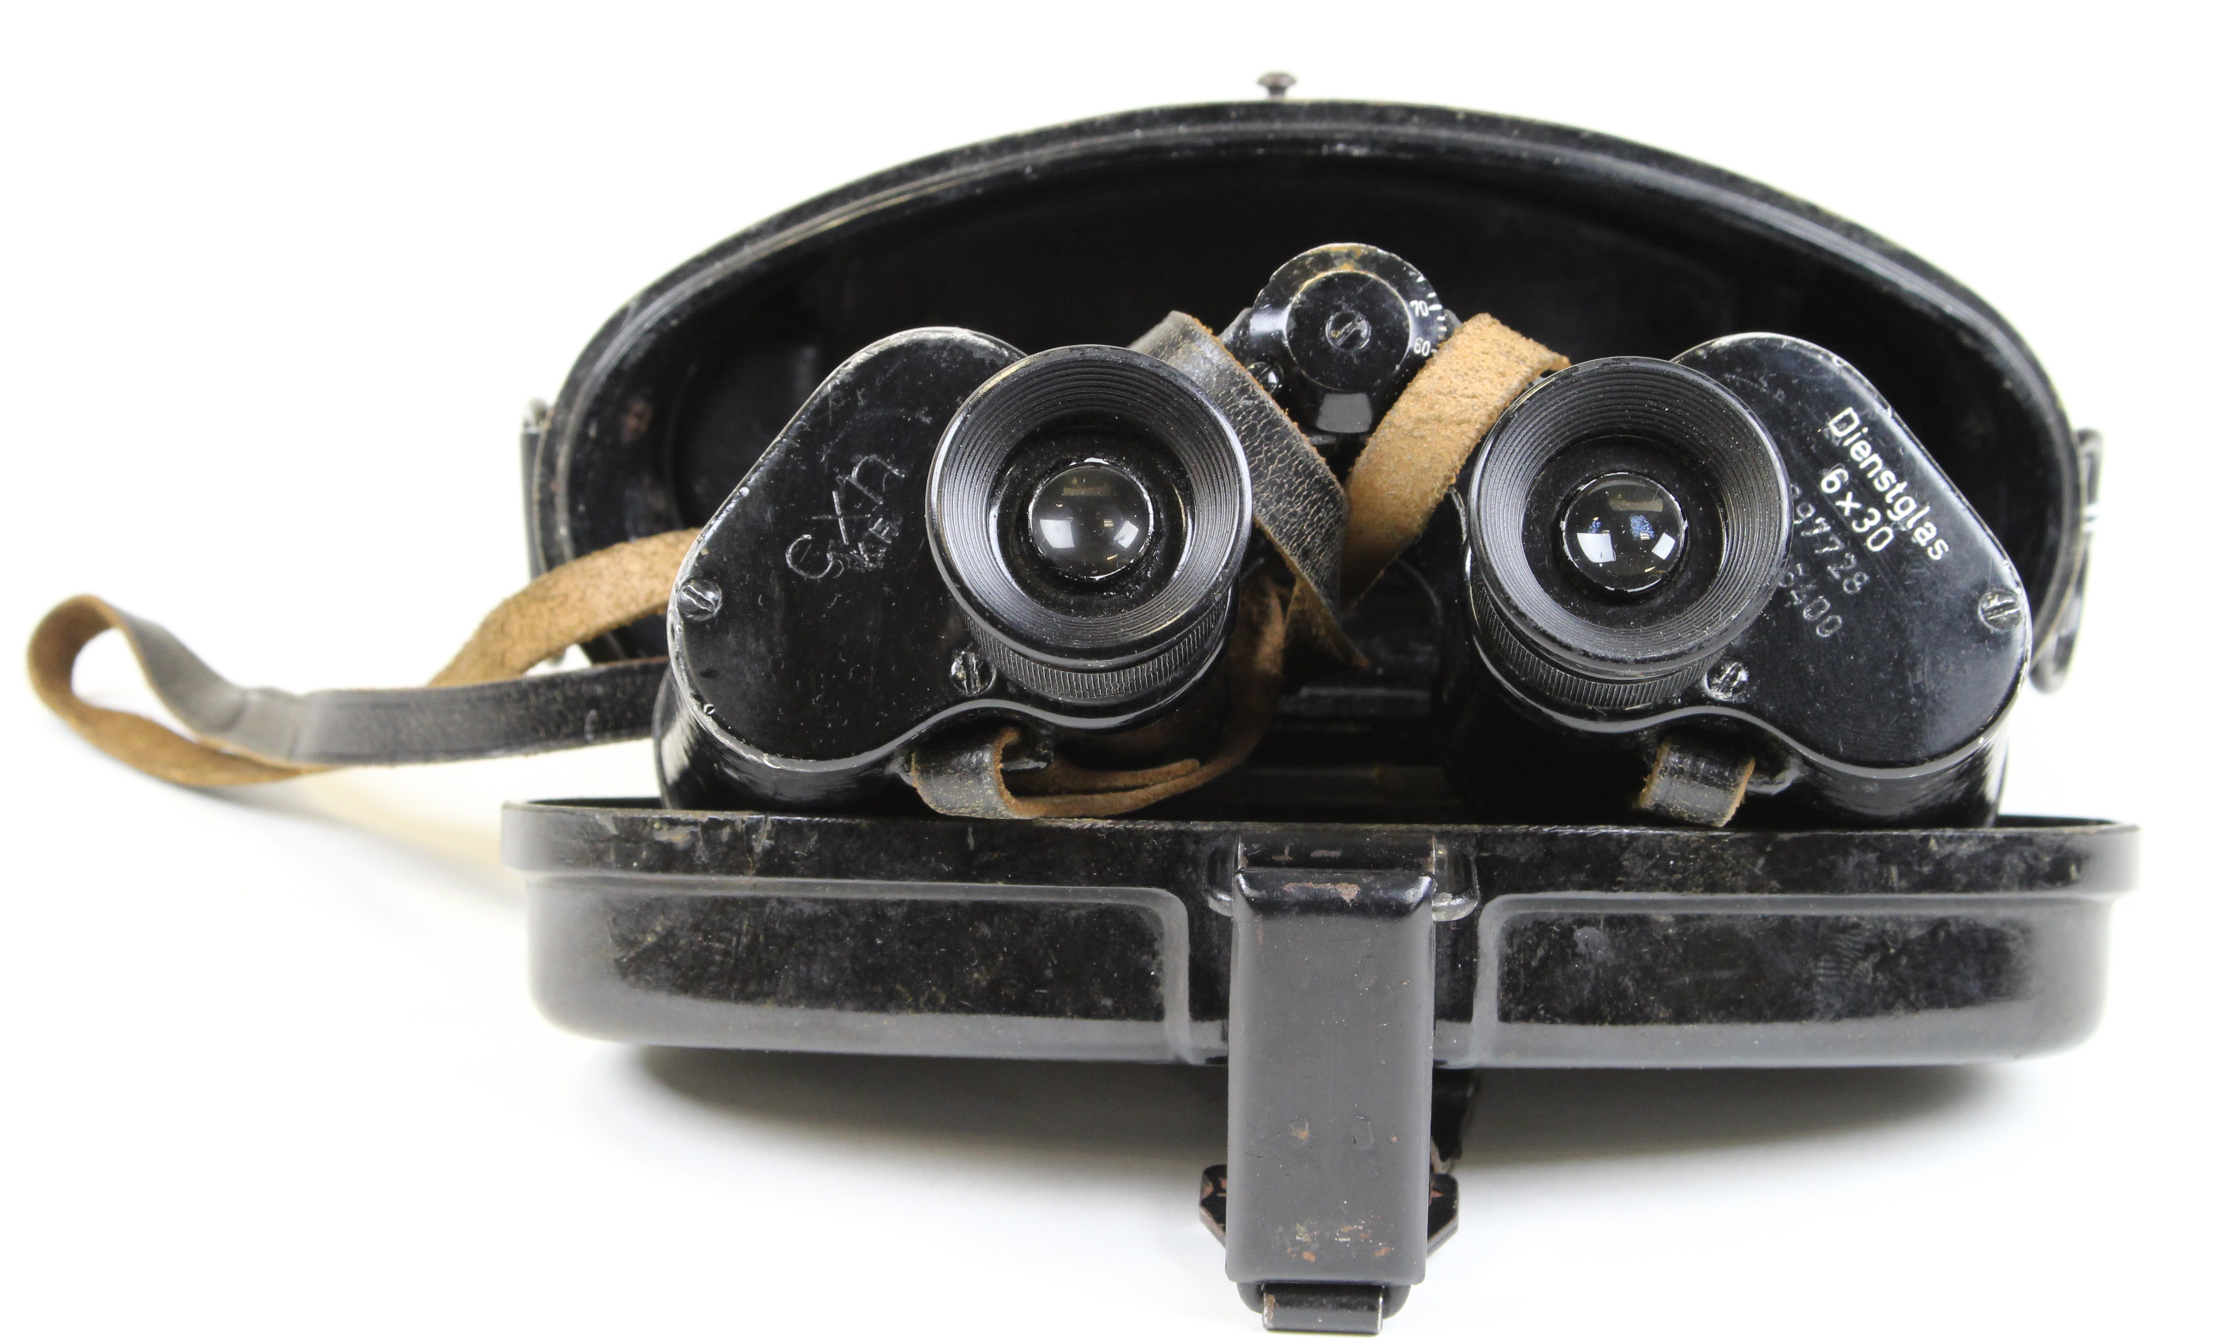 Dienstglass 6x30 German field Binoculars marked (cnx KF) to body. GC slight spotting to lenses.